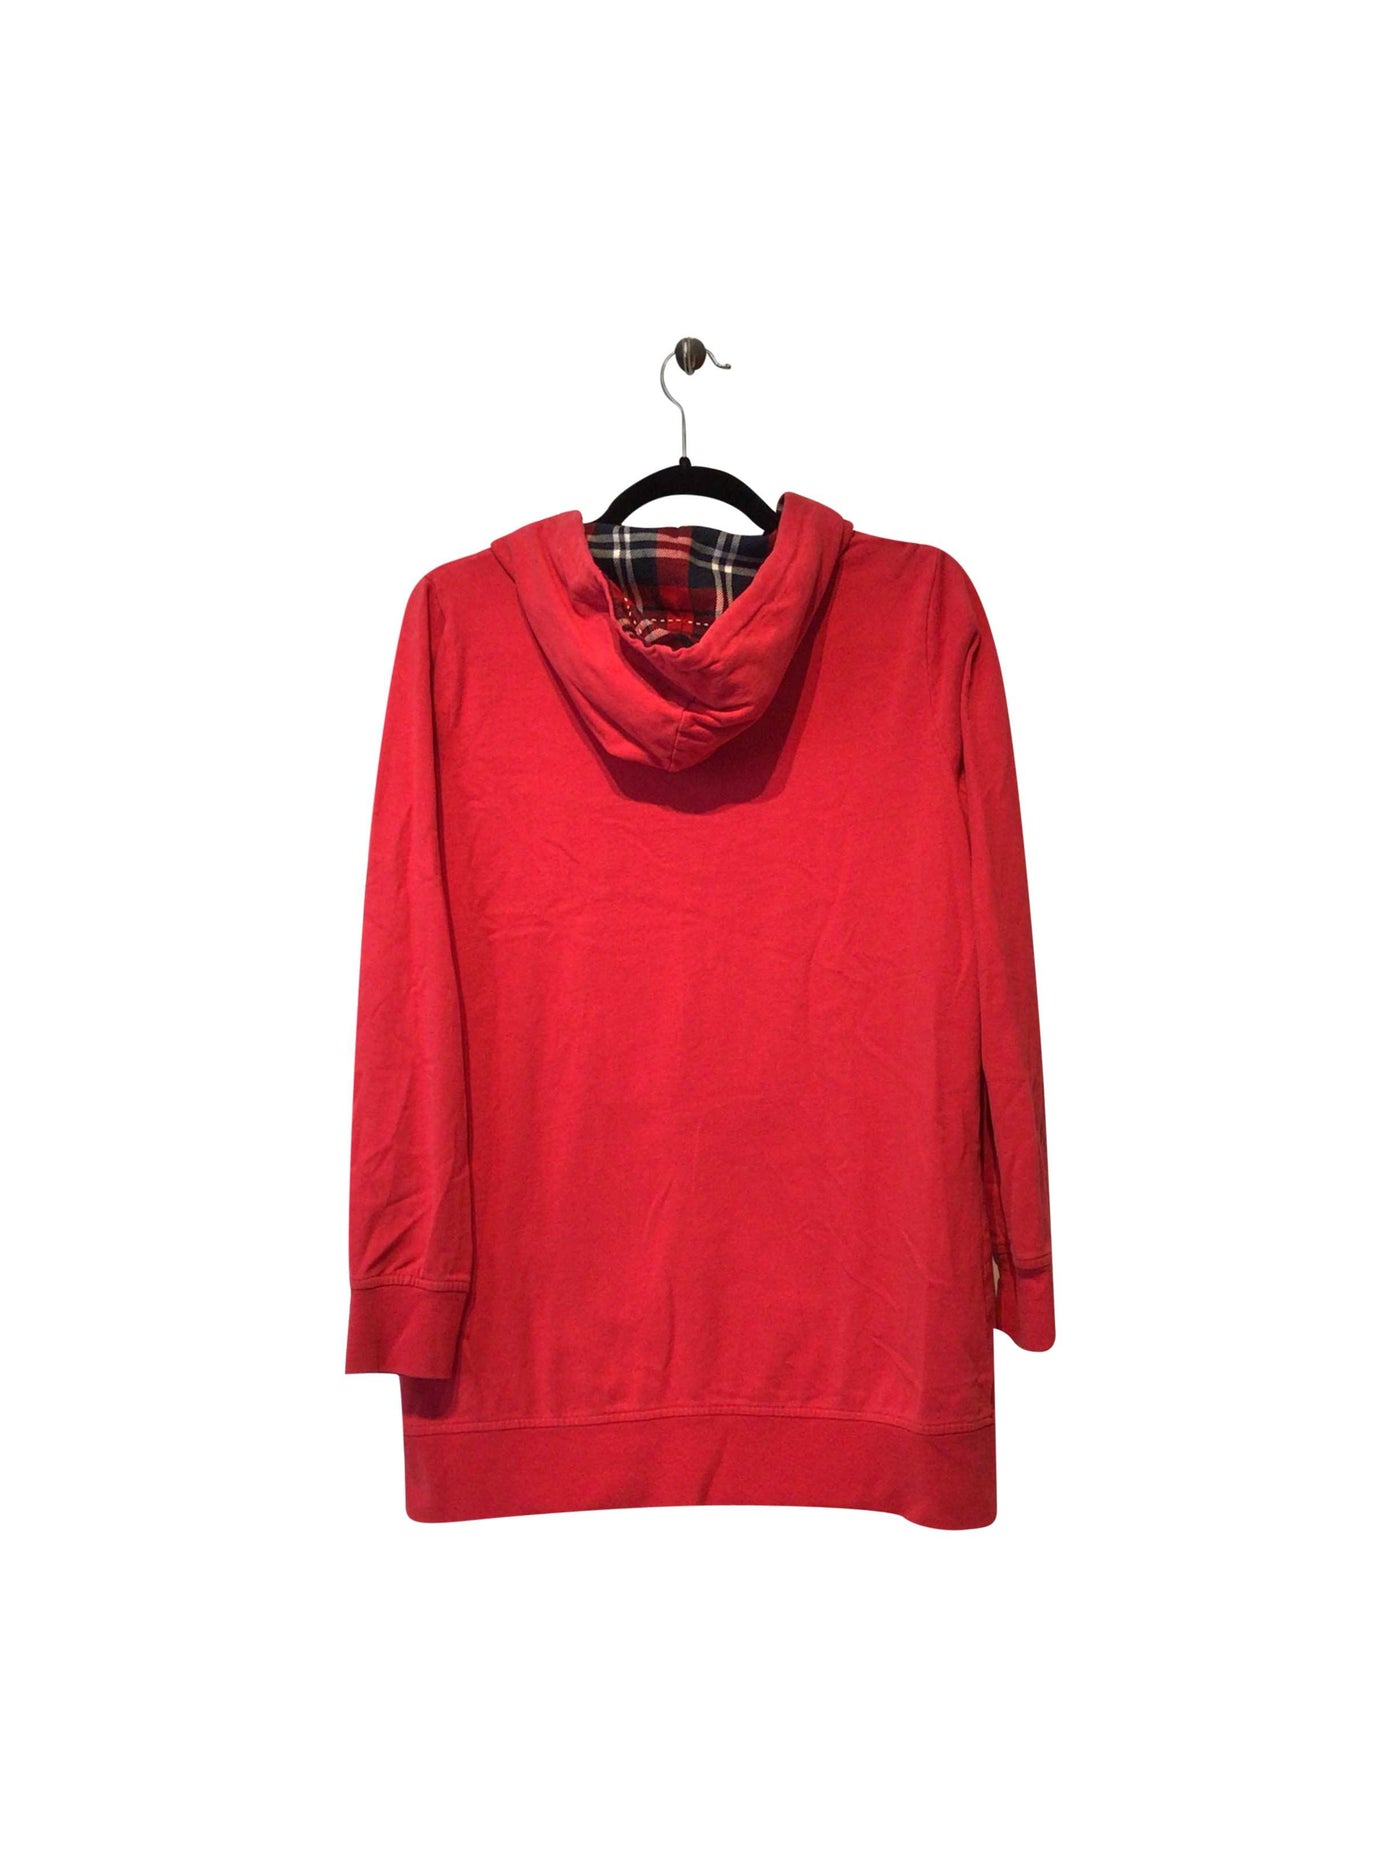 BOSSINI Regular fit Sweatshirt in Red  -  L  6.99 Koop